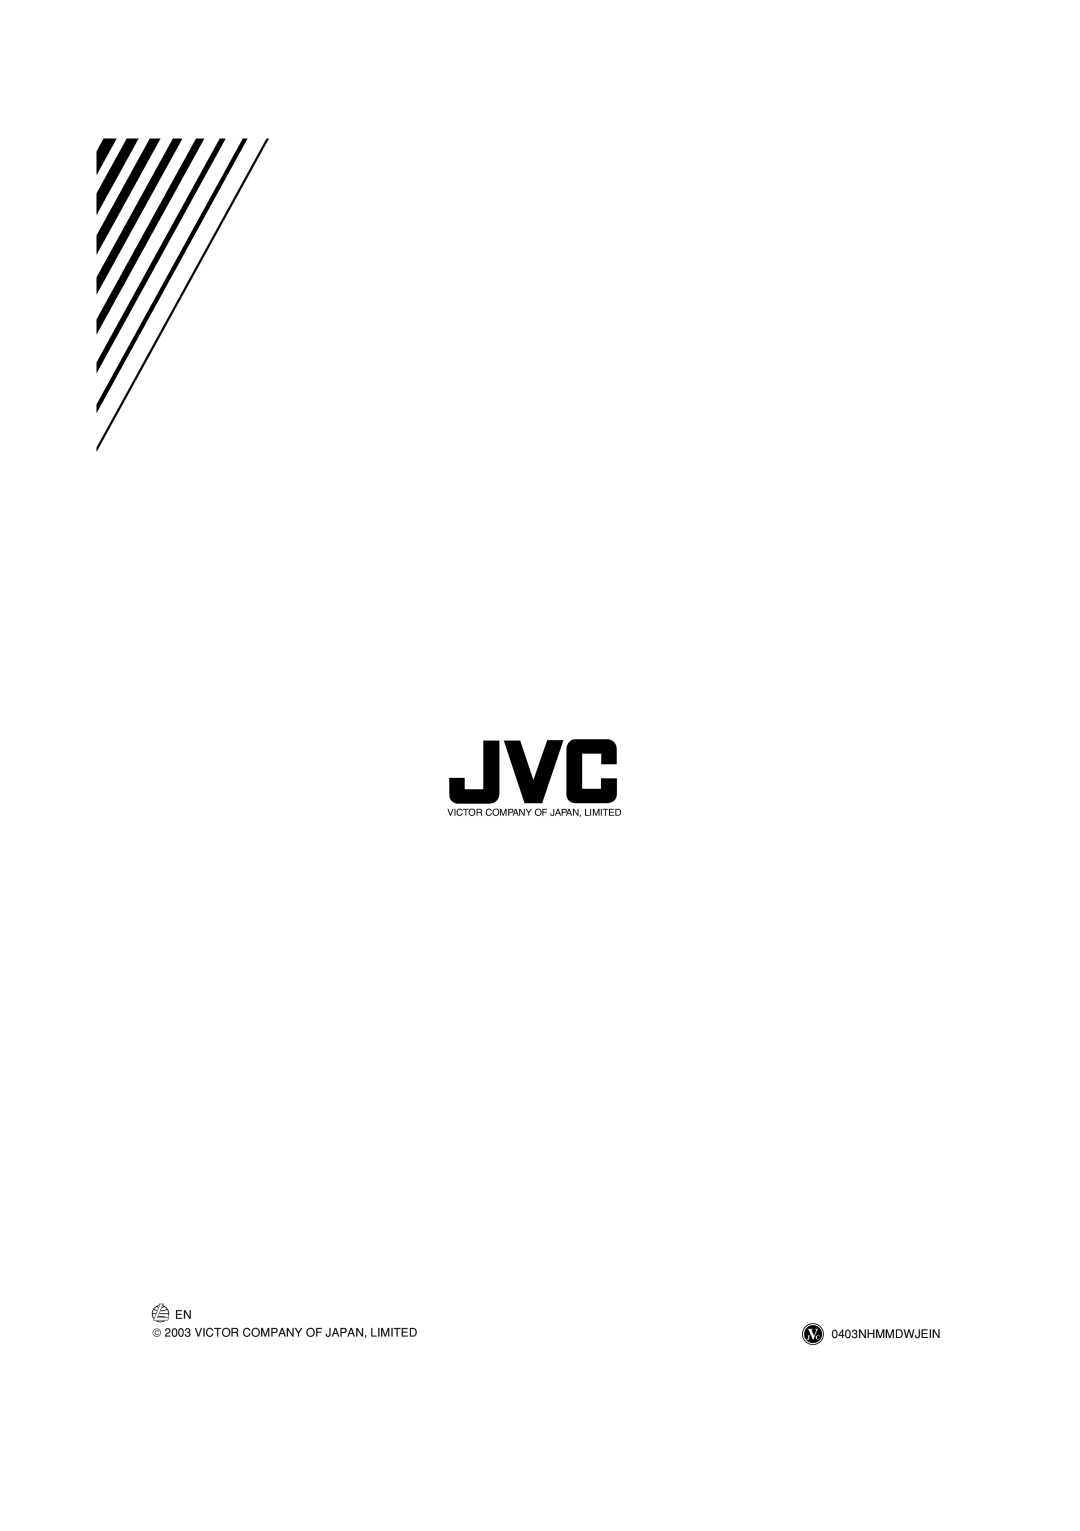 JVC RX-ES1SL manual  2003 VICTOR COMPANY OF JAPAN, LIMITED, 0403NHMMDWJEIN, Victor Company Of Japan, Limited 